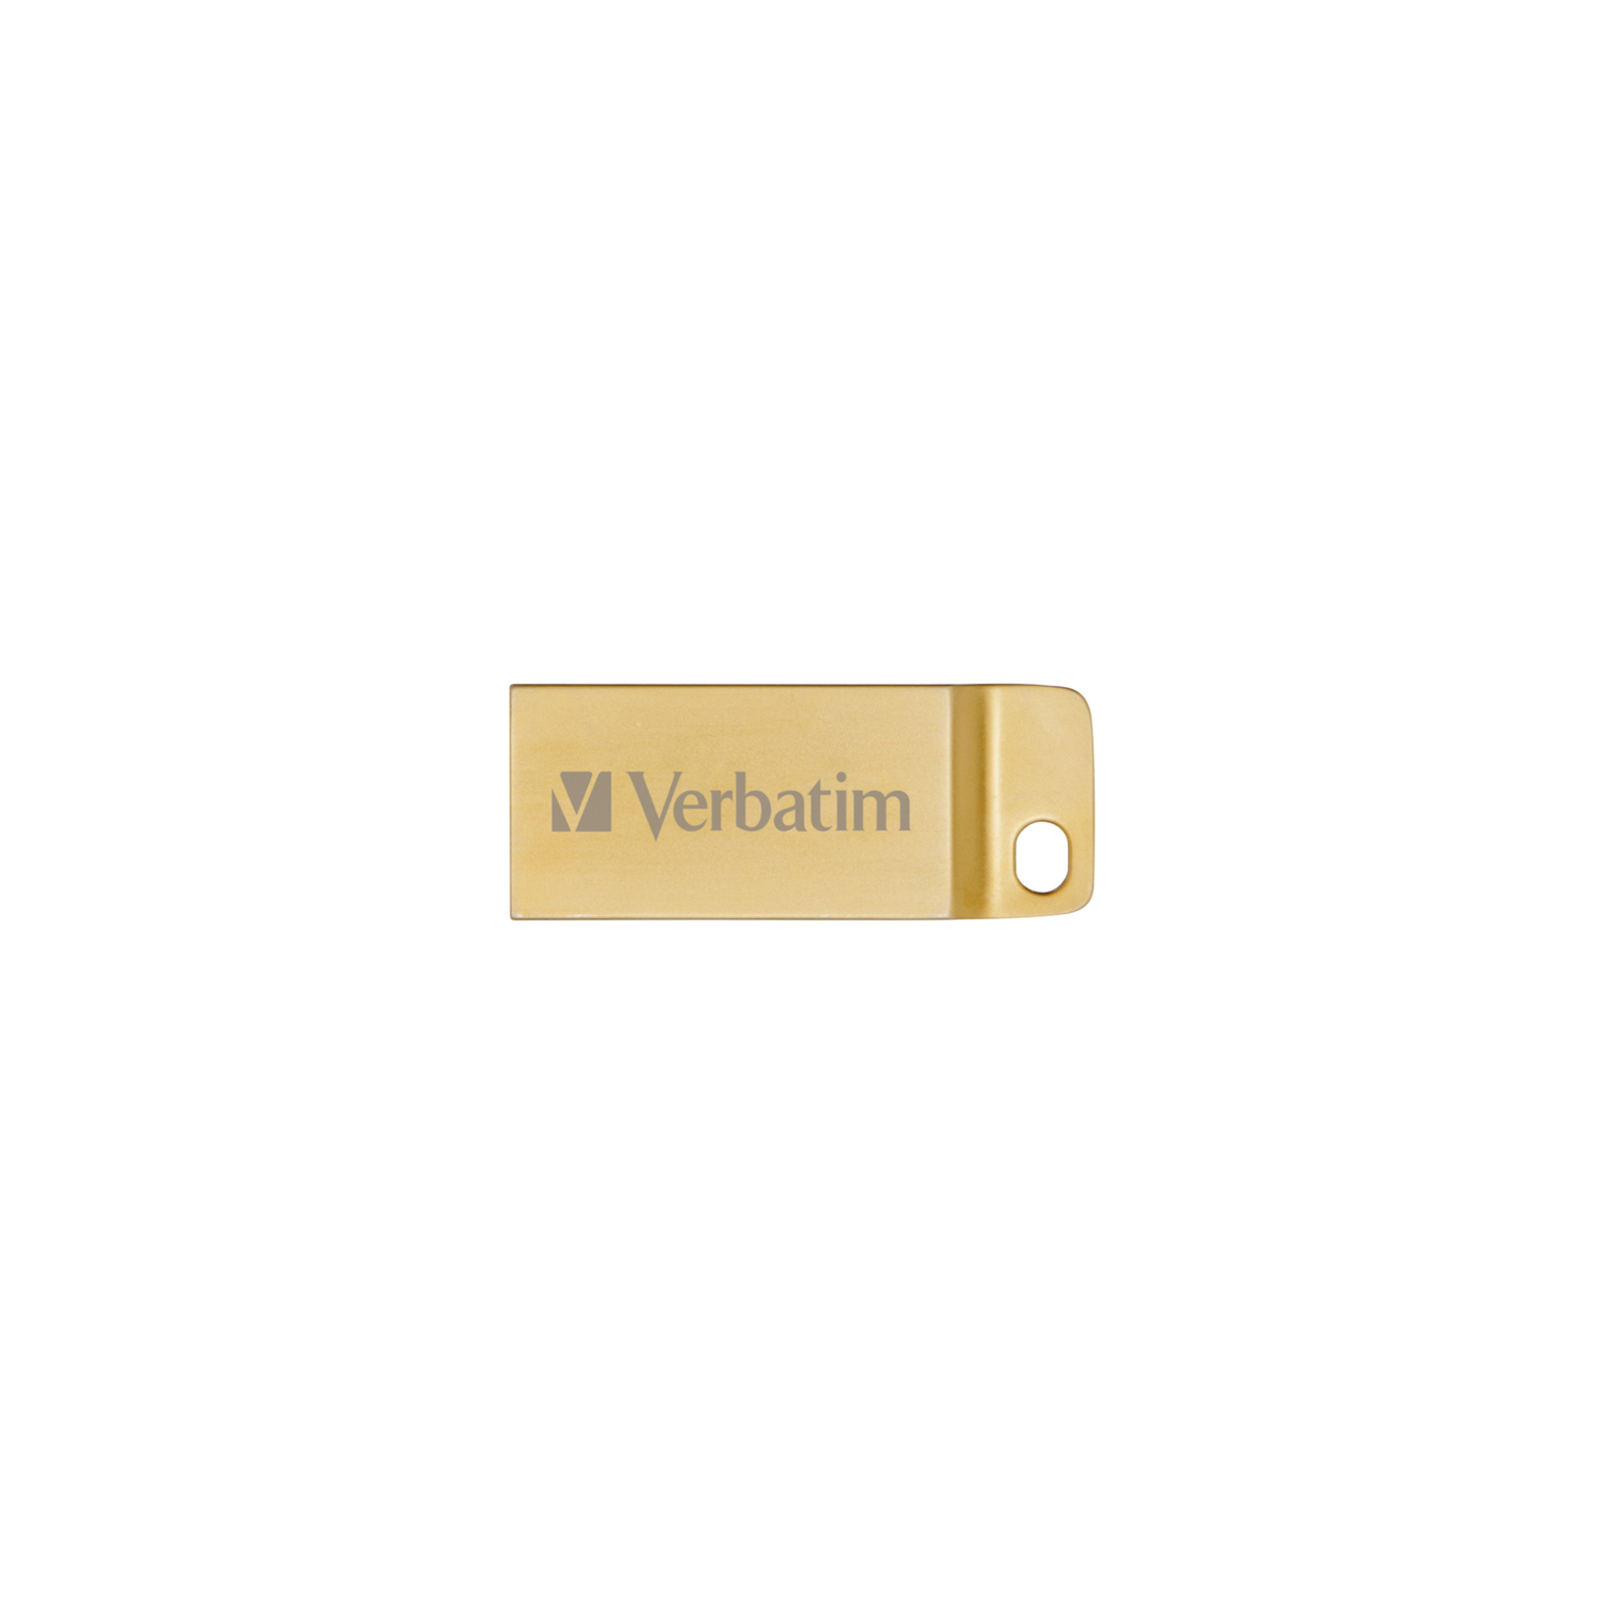 USB флеш накопитель Verbatim 16GB Metal Executive Gold USB 3.0 (99104)